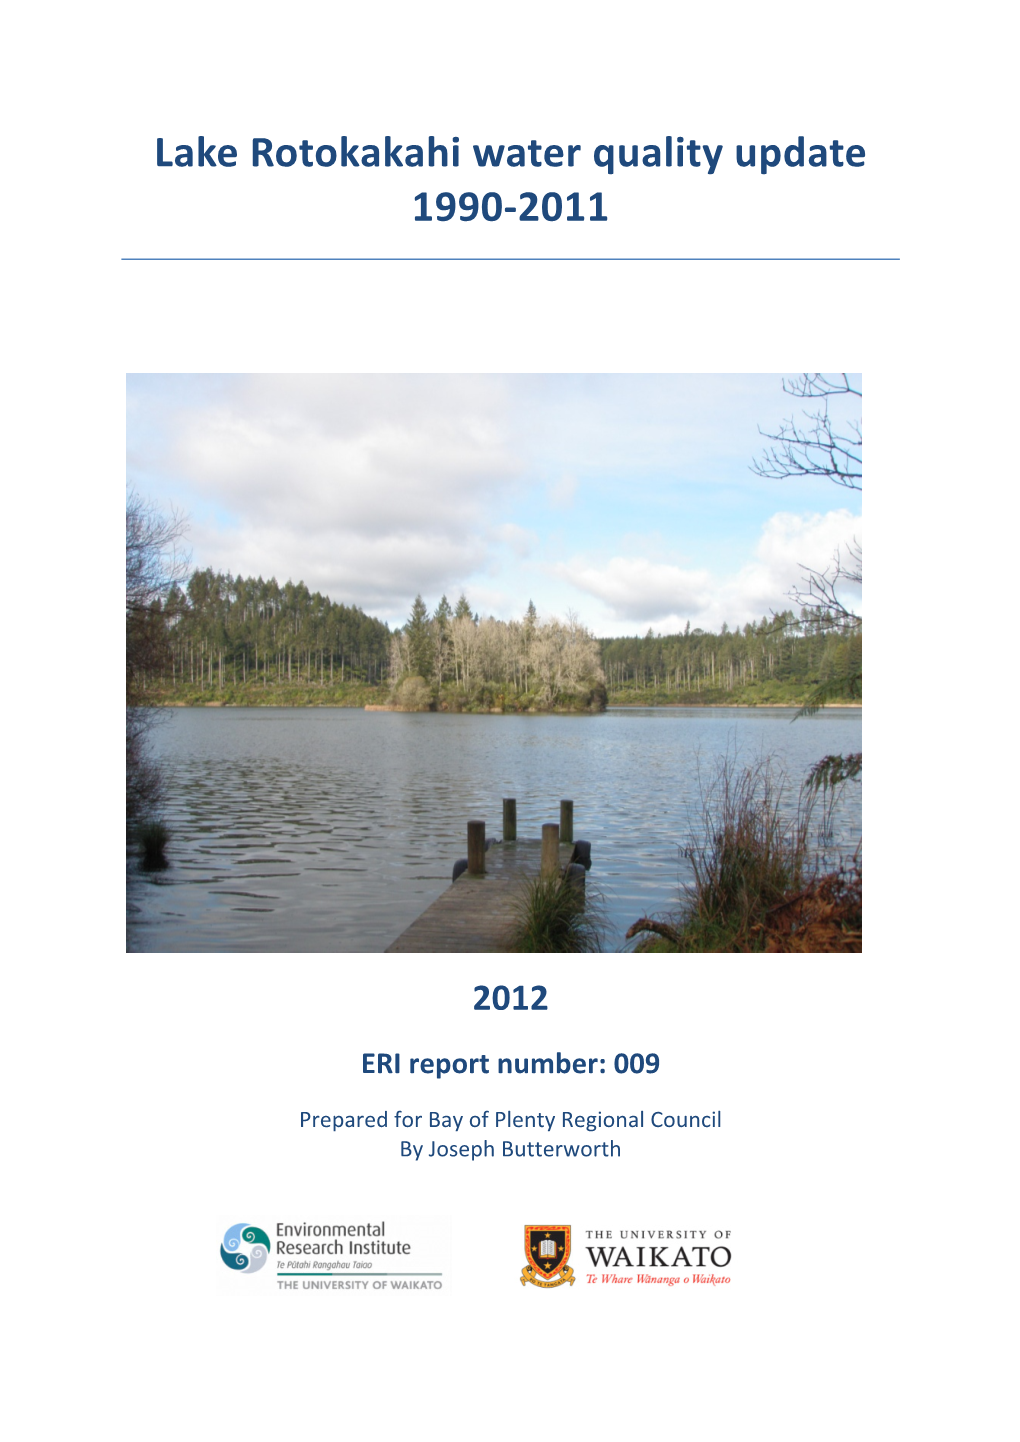 Lake Rotokakahi Water Quality Update 1990-2011